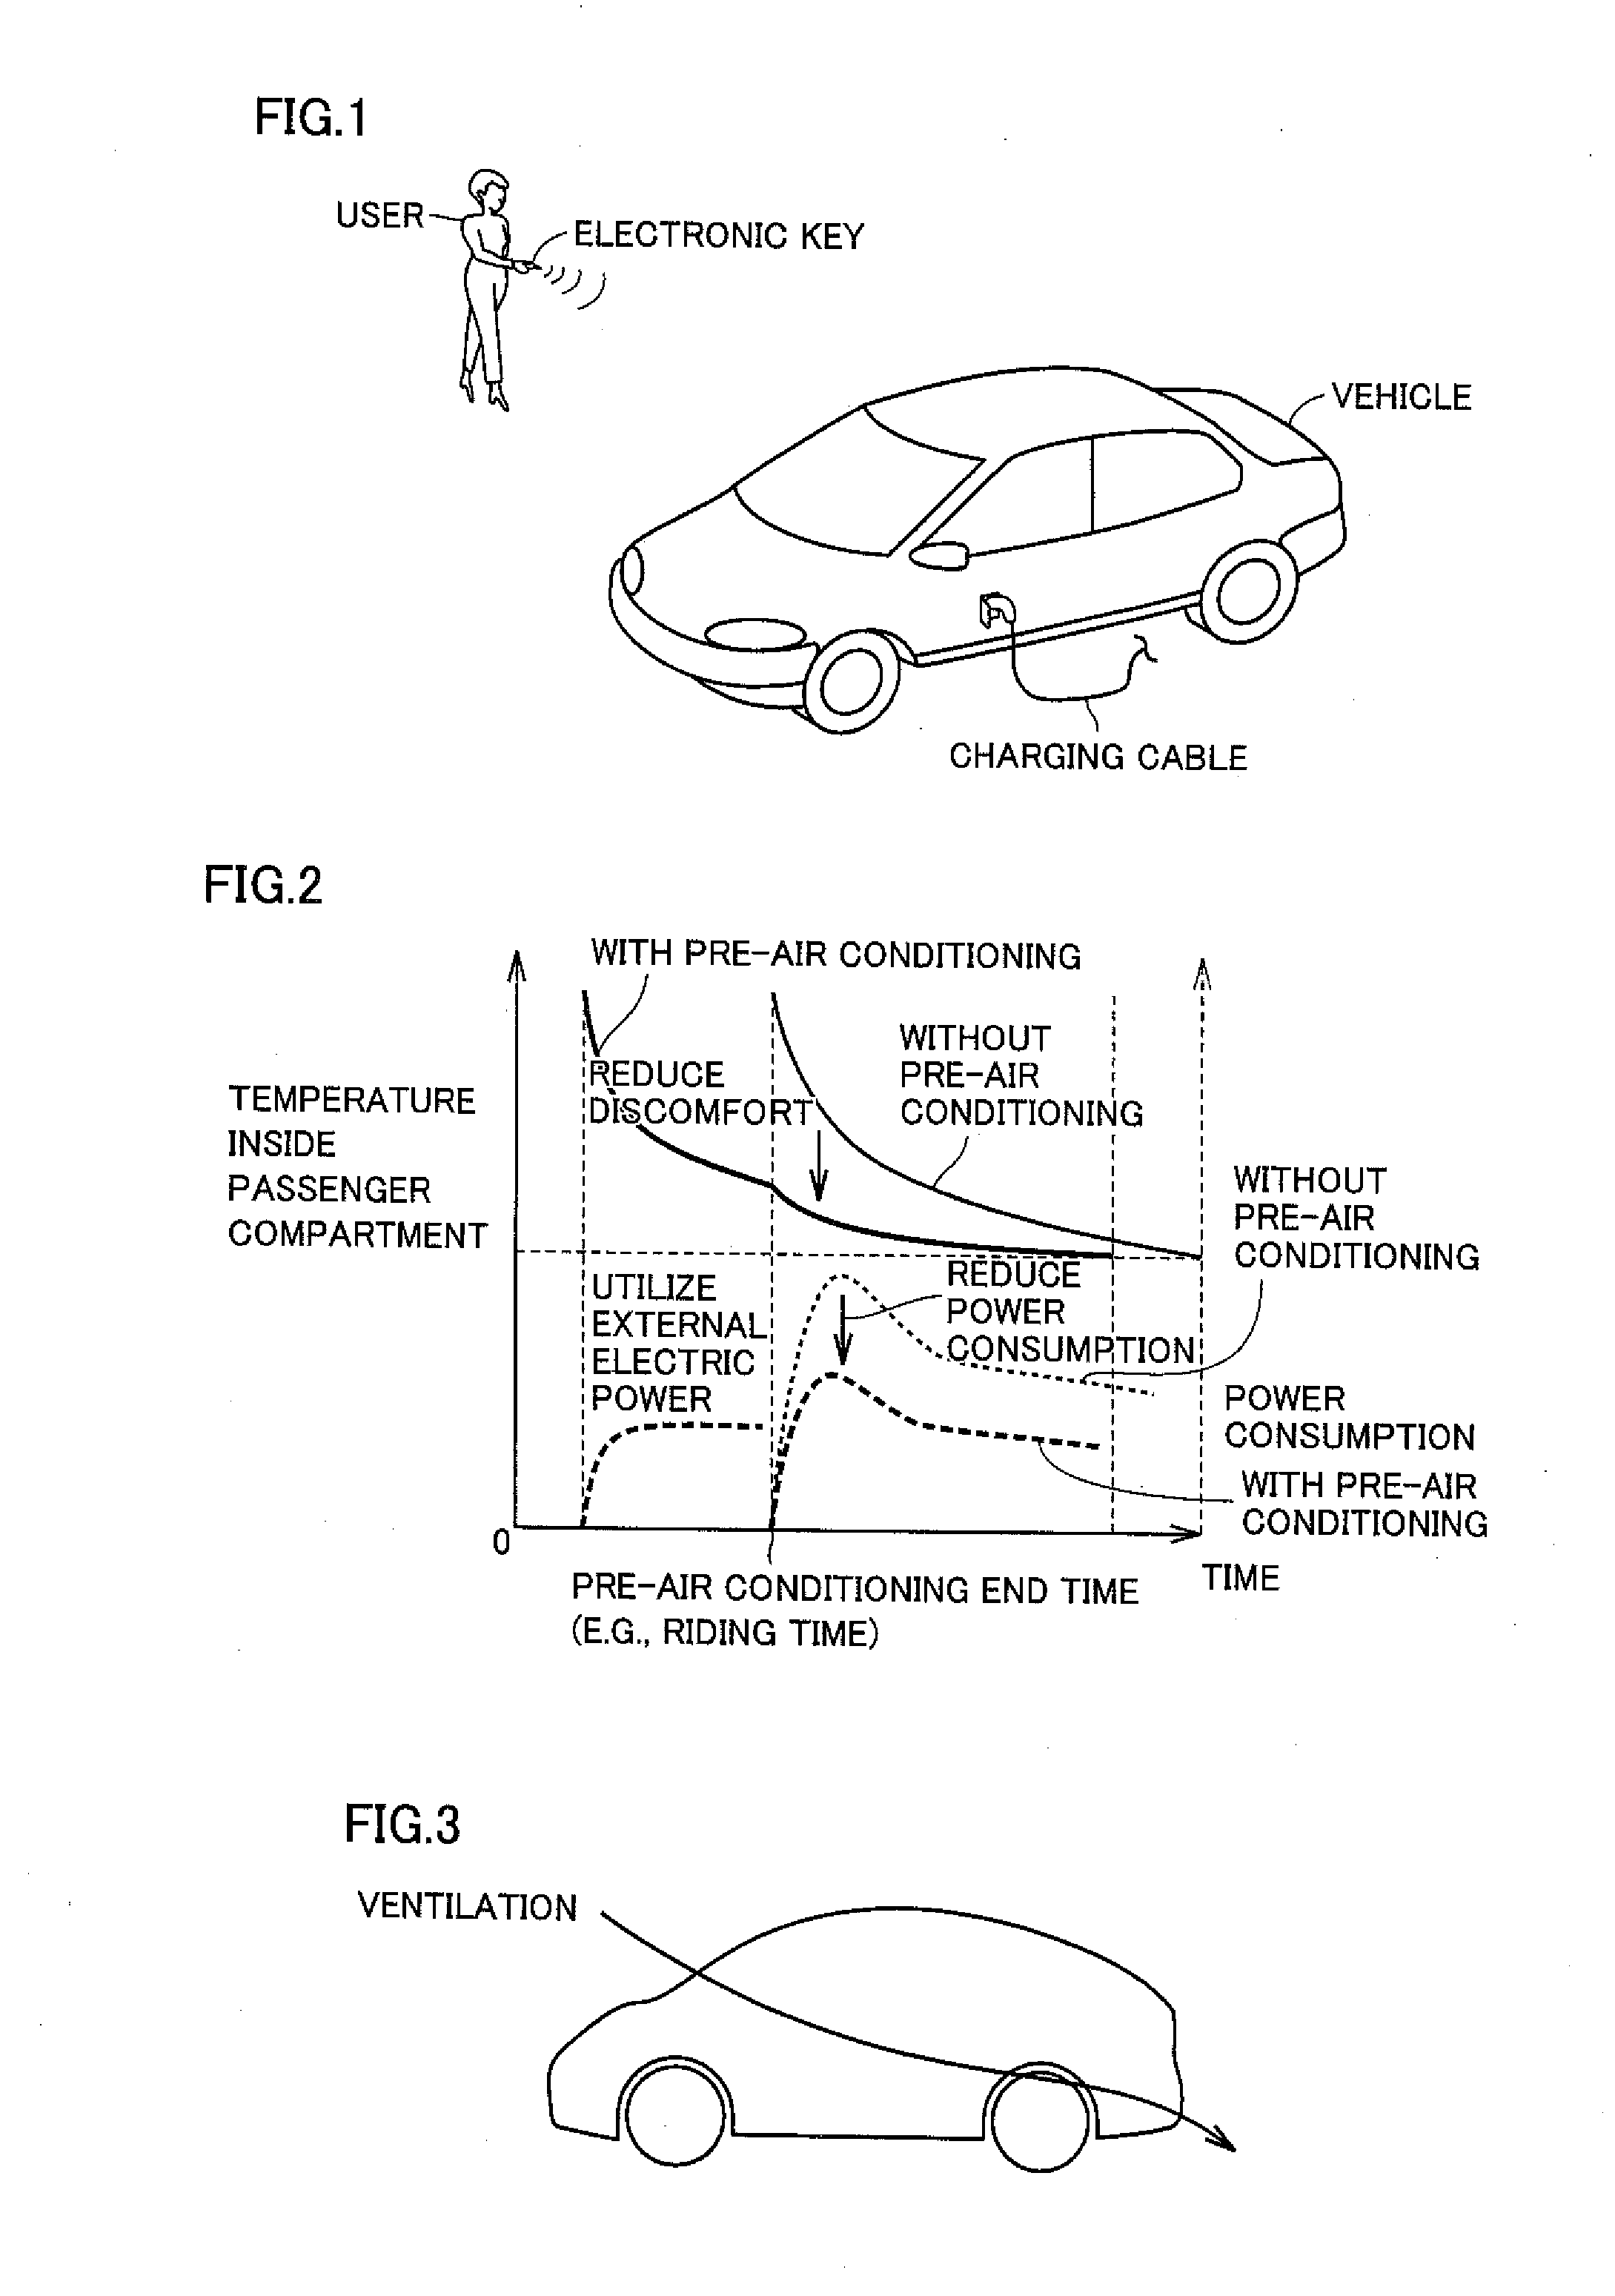 Vehicle comprising air conditioning apparatus